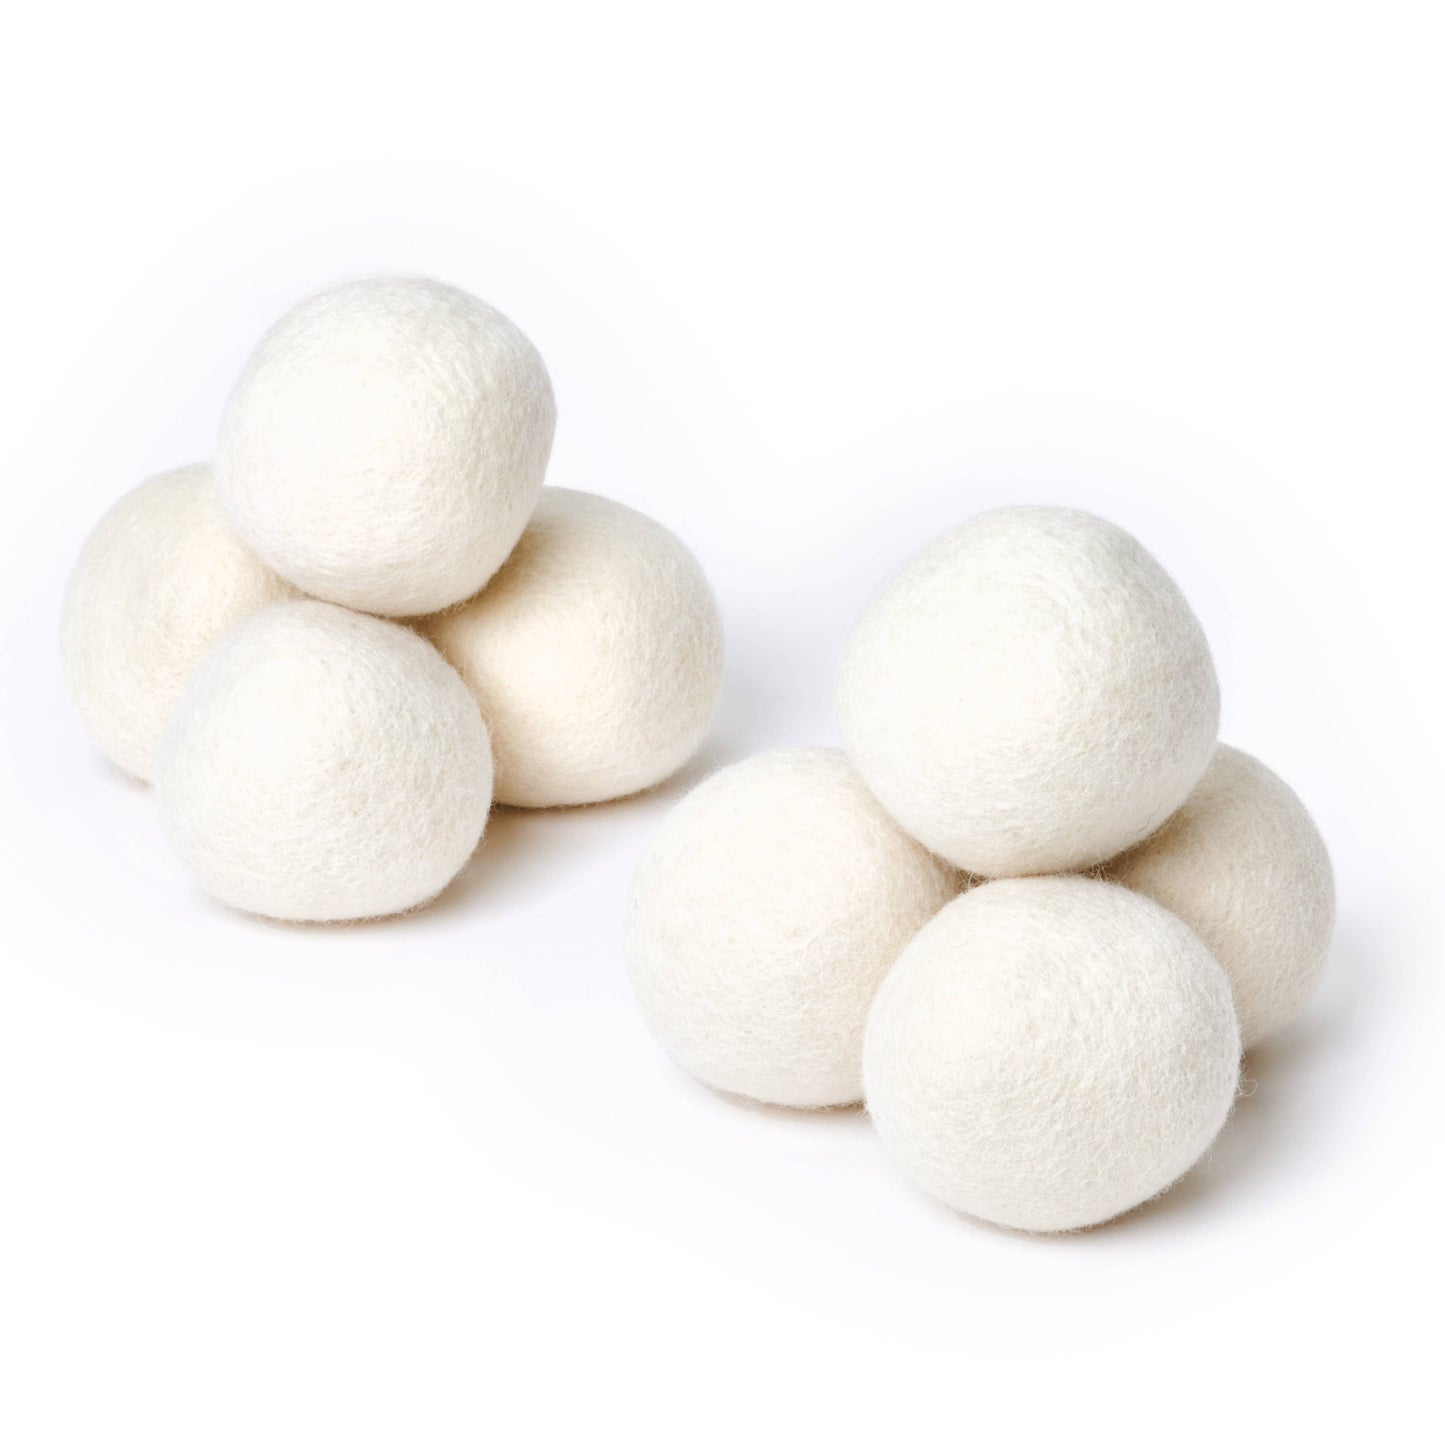 Desesh - Wool Dryer Balls (Bulk, Unpackaged)